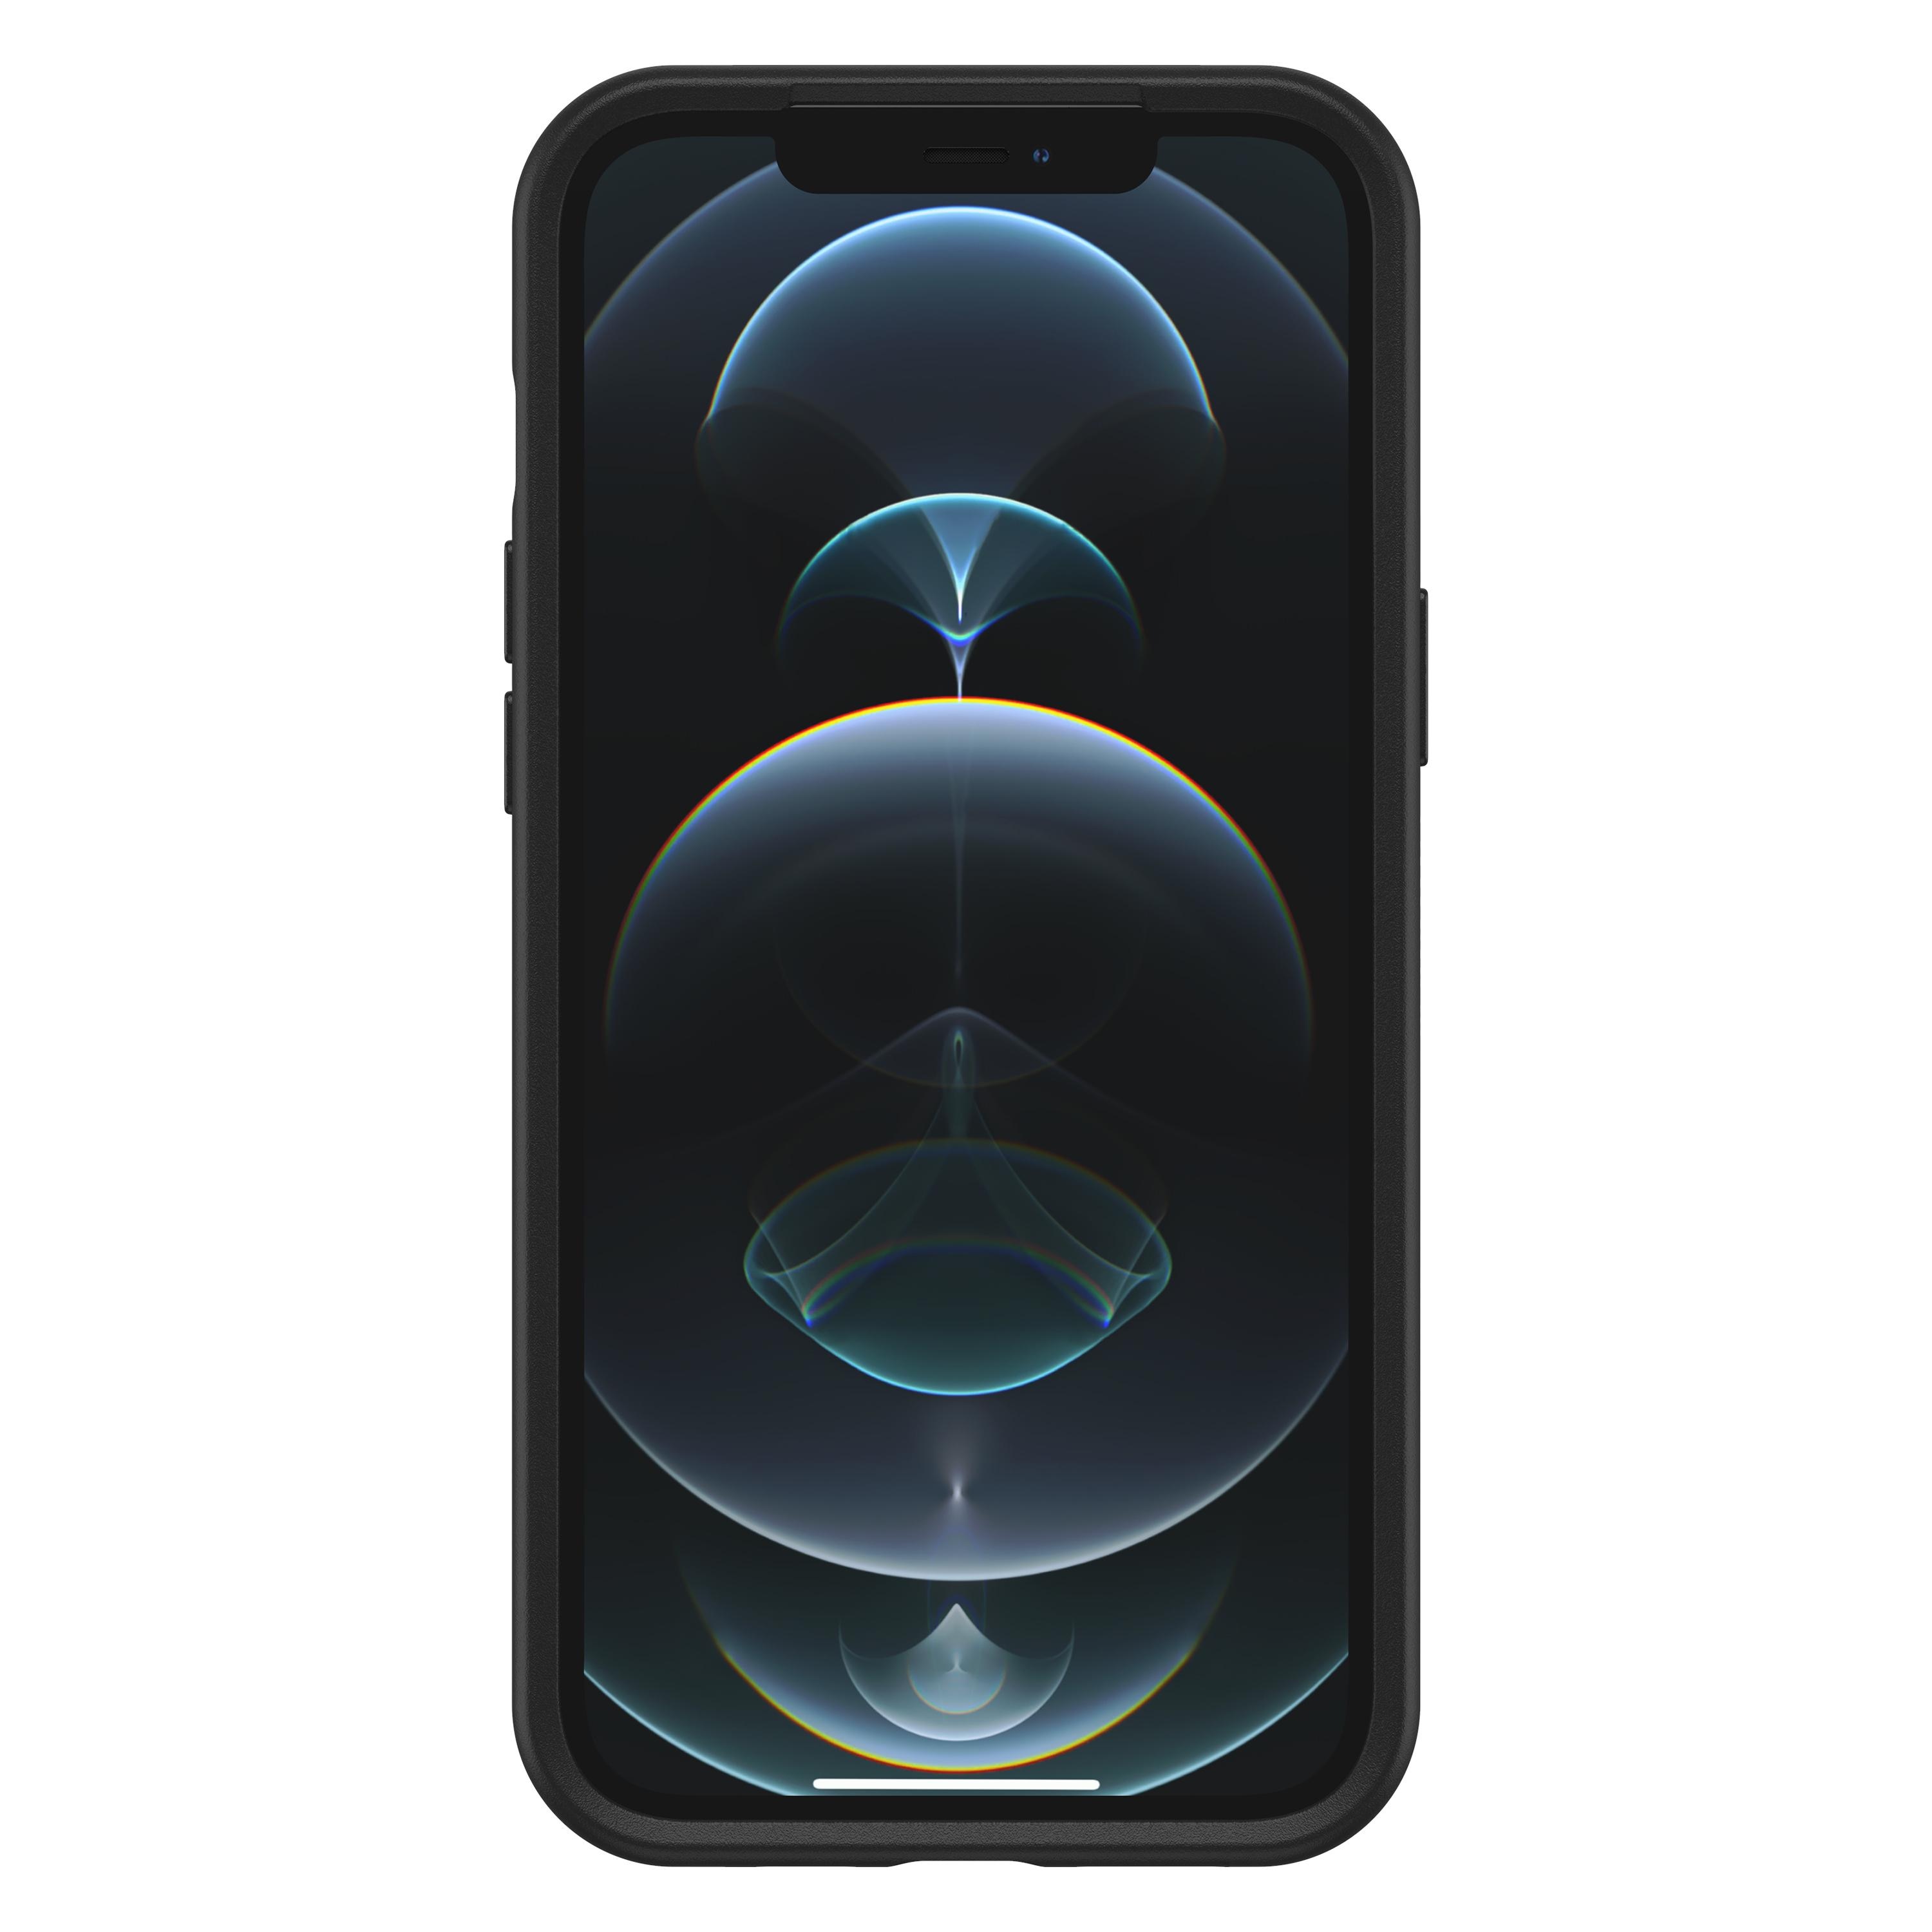 Otter+Pop Symmetry Case iPhone 12 Pro Max Black